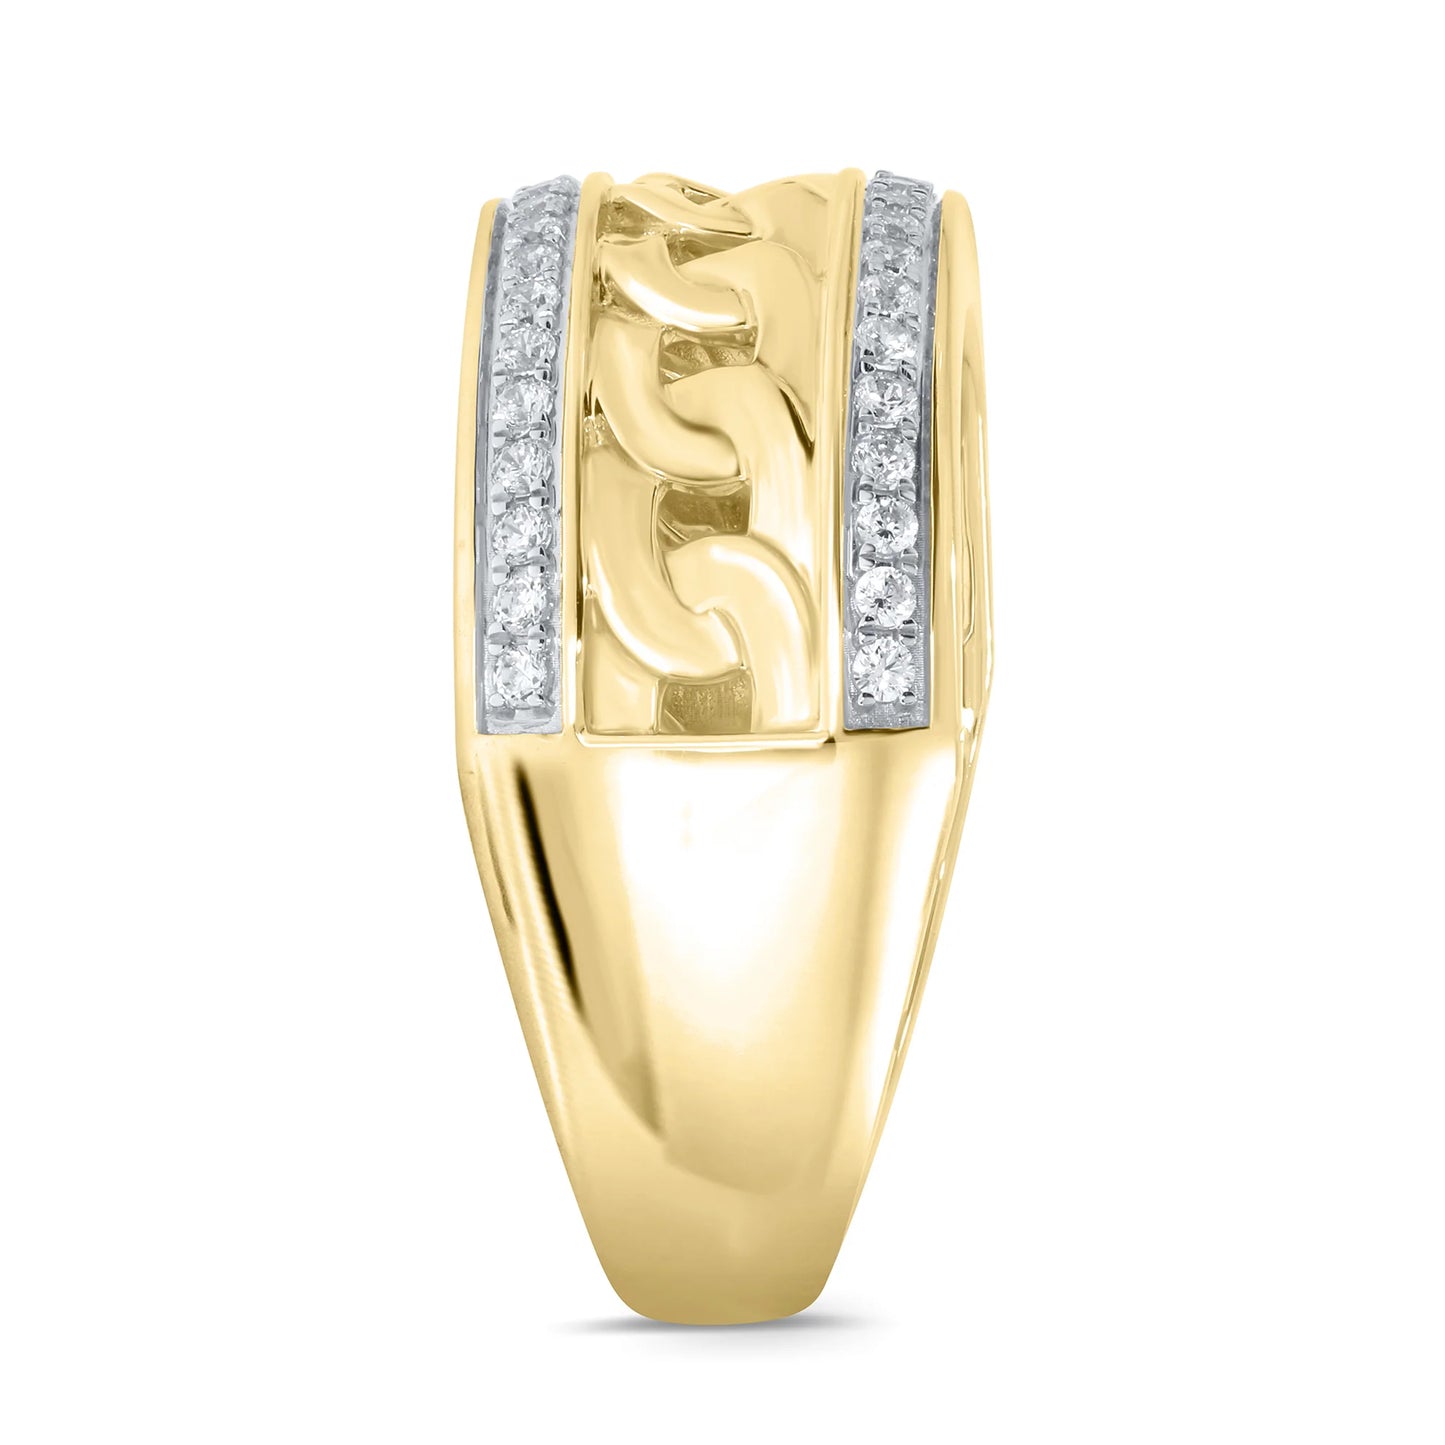 10K YELLOW GOLD .60 CARAT MENS REAL DIAMOND ENGAGEMENT WEDDING PINKY RING BAND